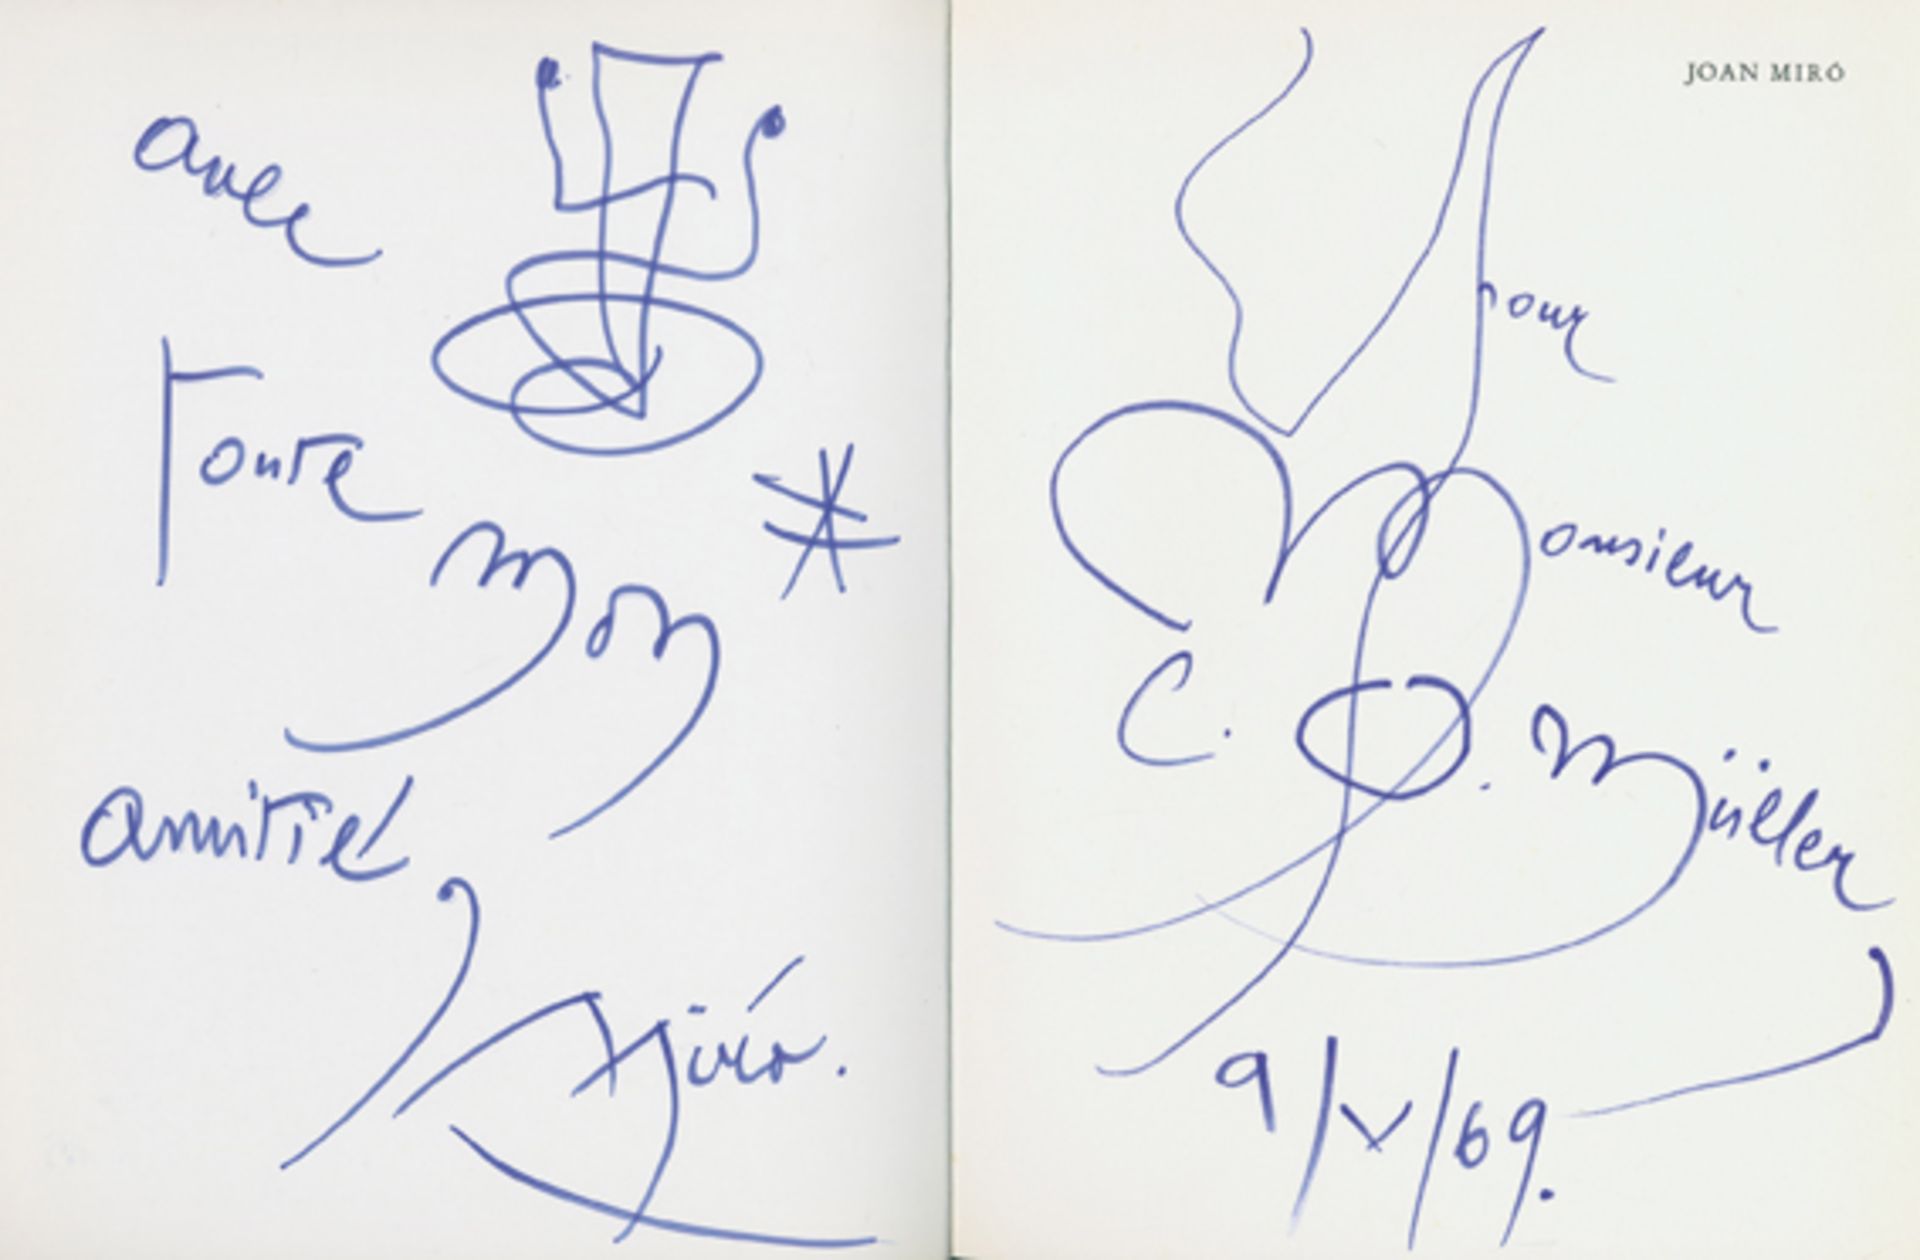 Joan Miro.